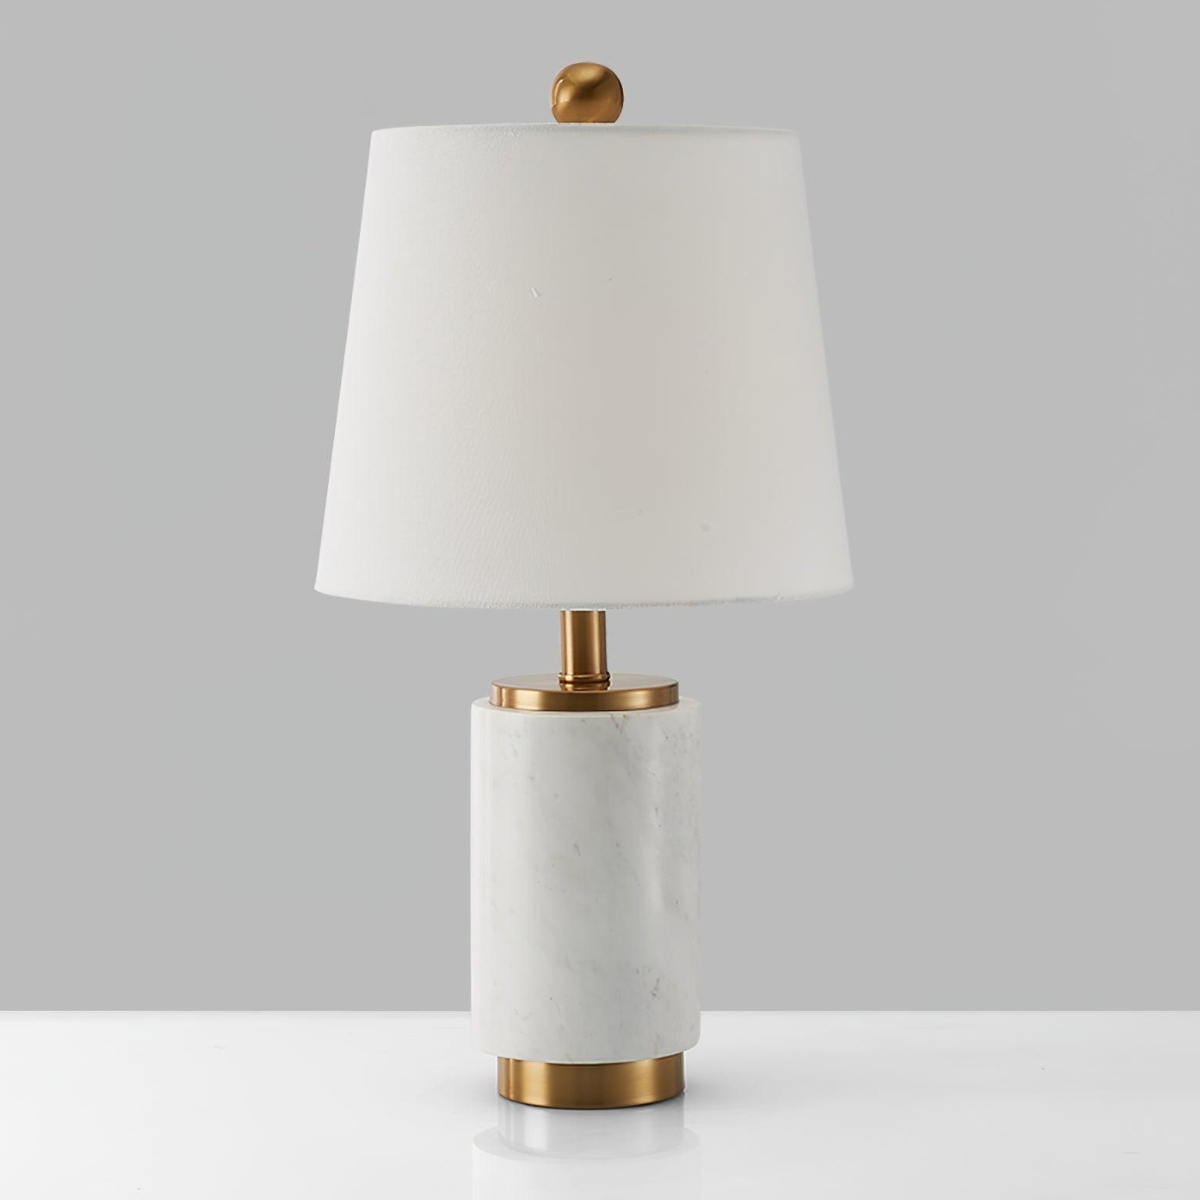 Joana-Marble-Based-Table-Lamp-1